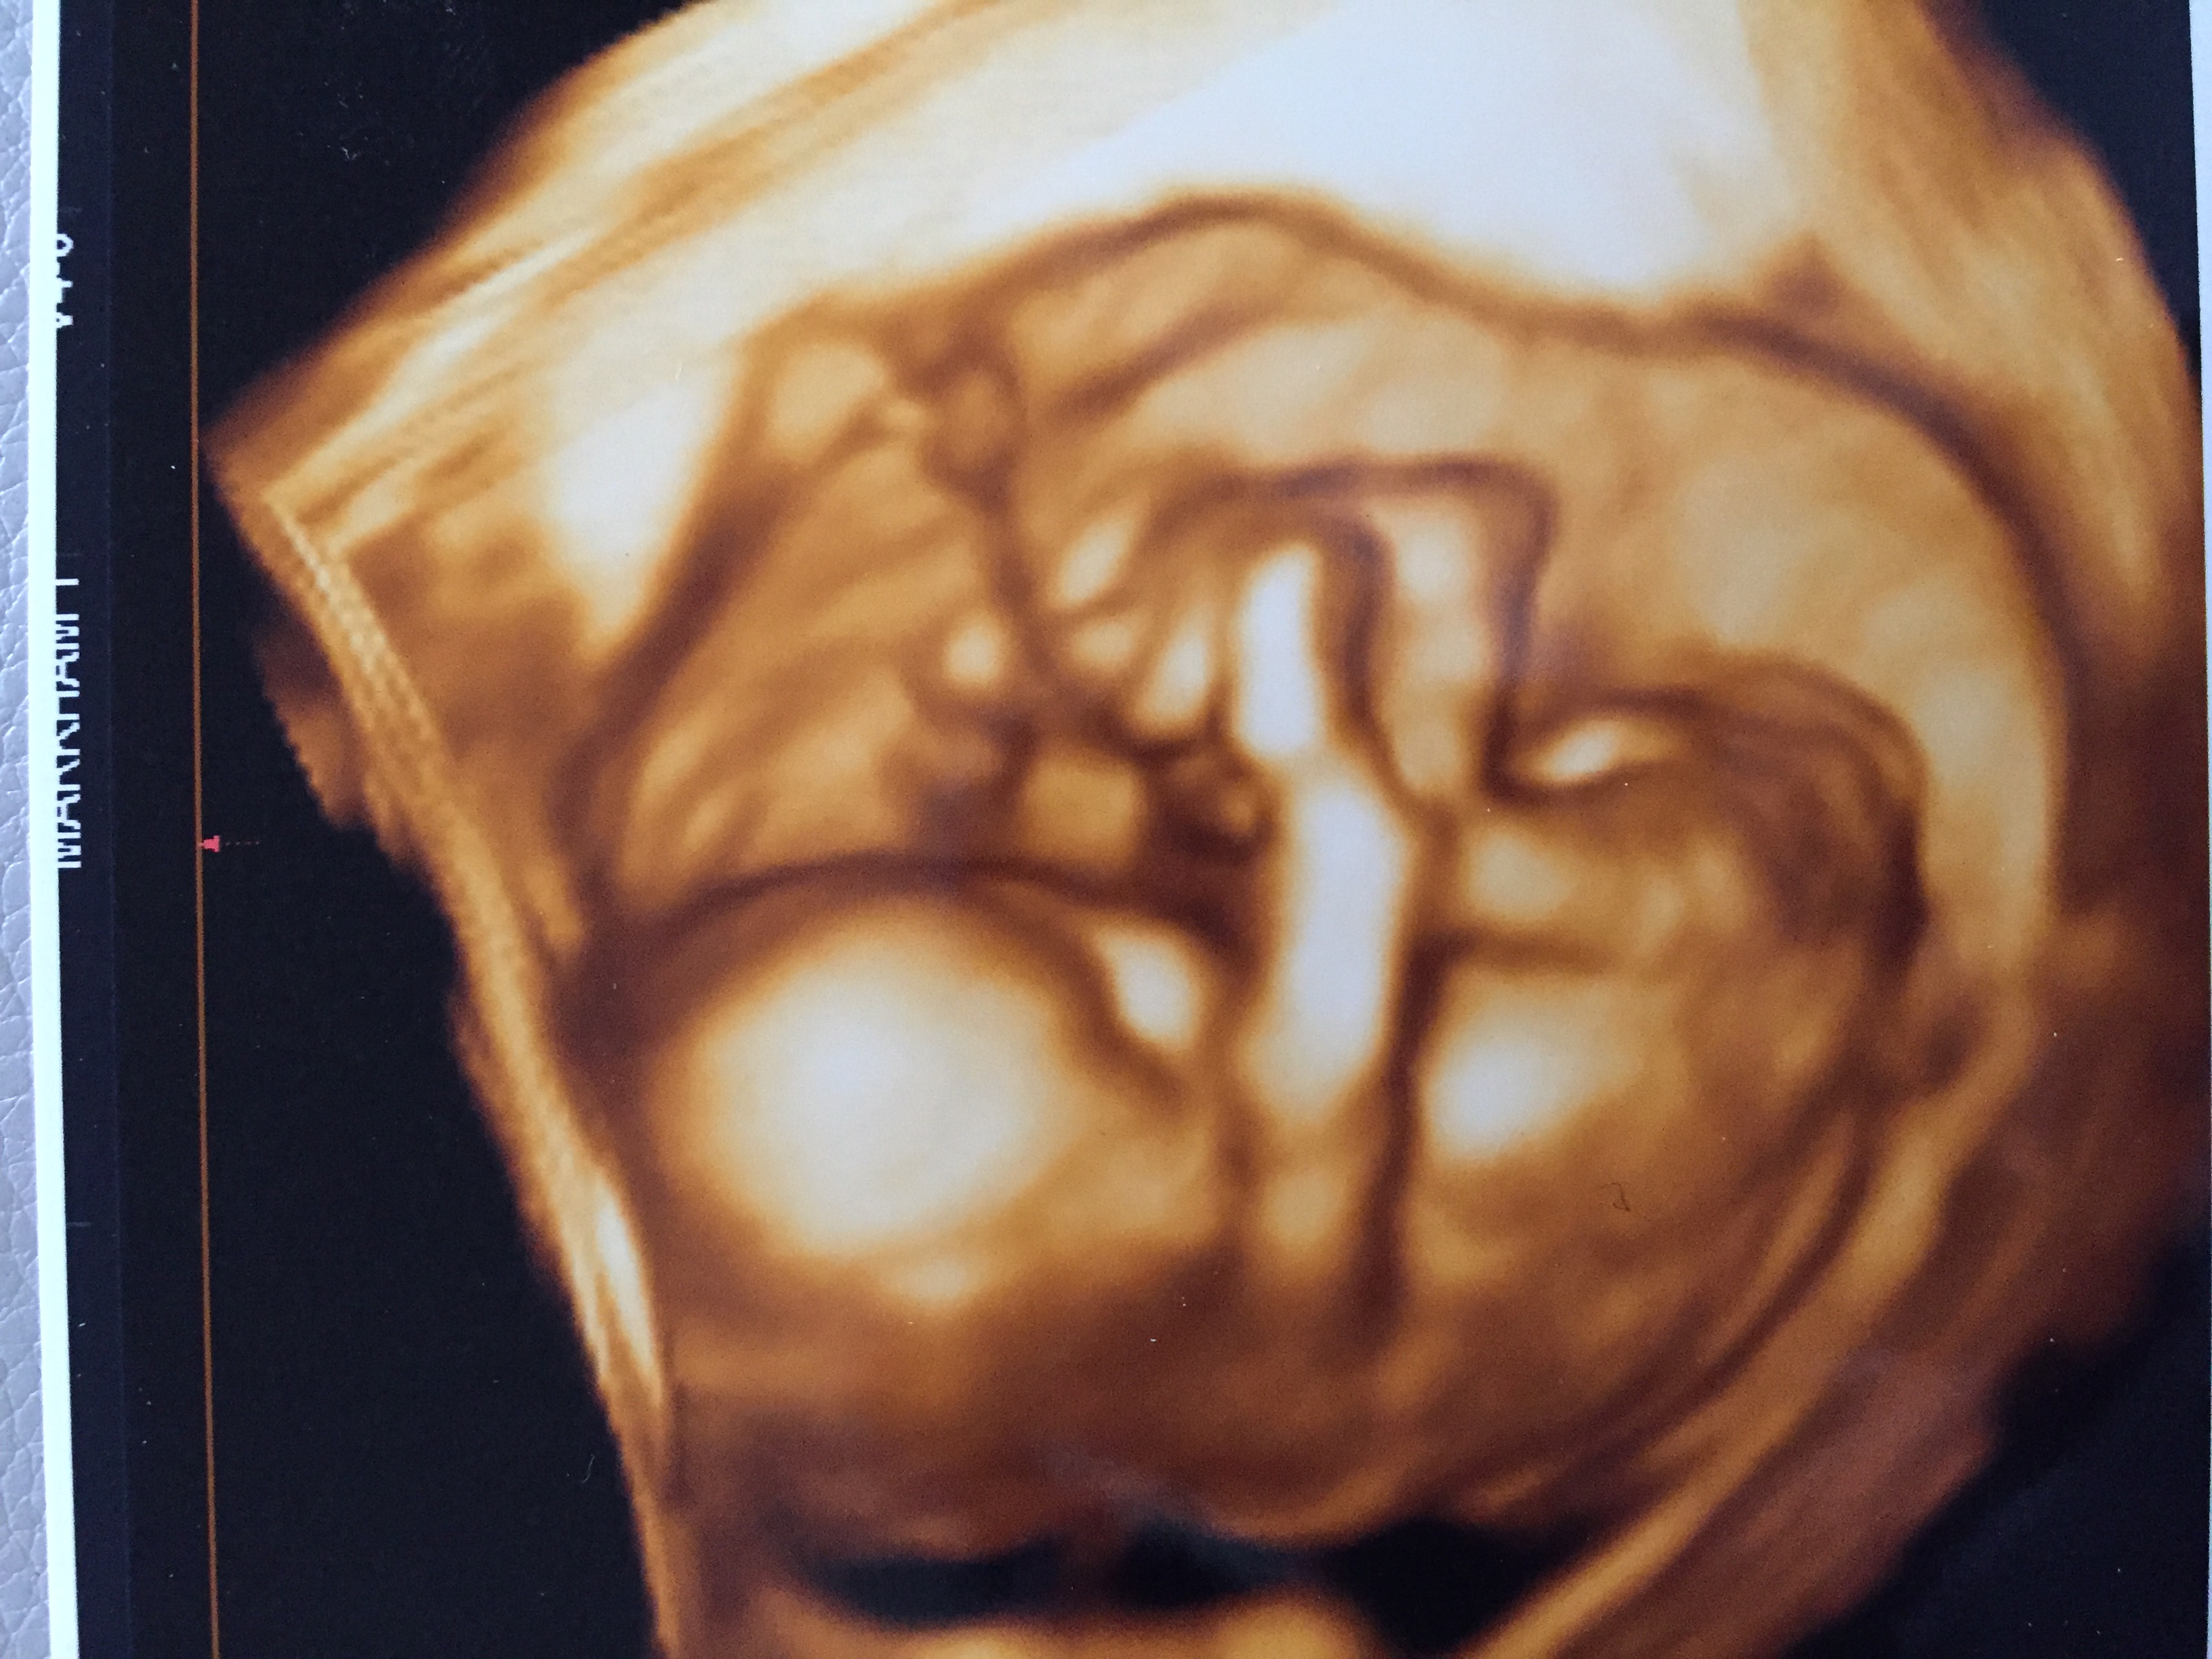 16 week 3D ultrasound - boy or girl?! Help?!